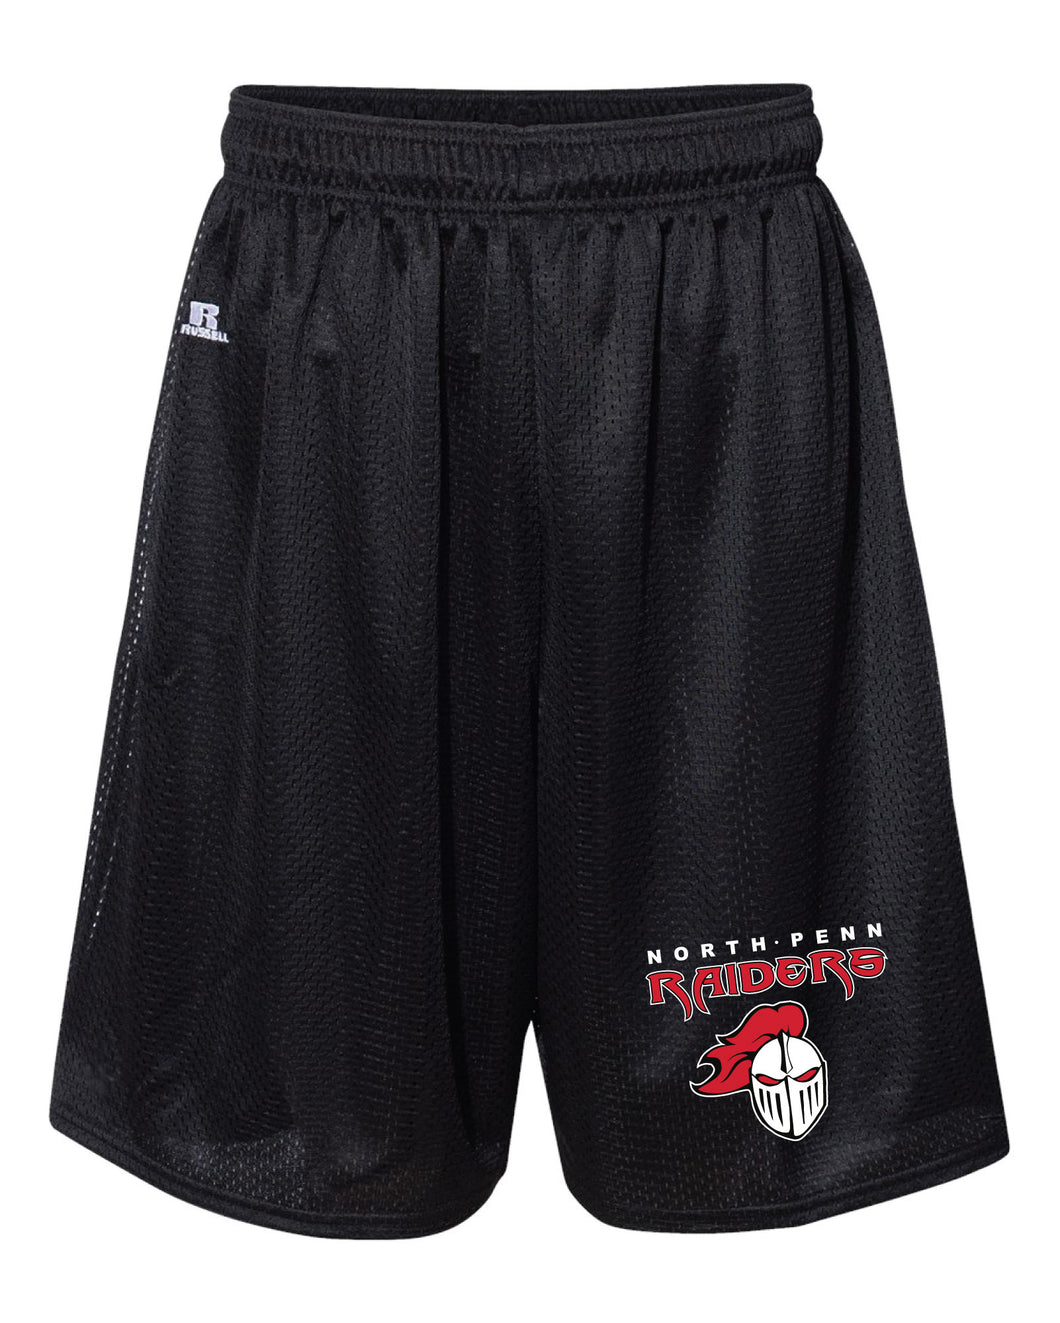 North Penn Baseball Russell Athletic Tech Shorts - Black (Design 1) - 5KounT